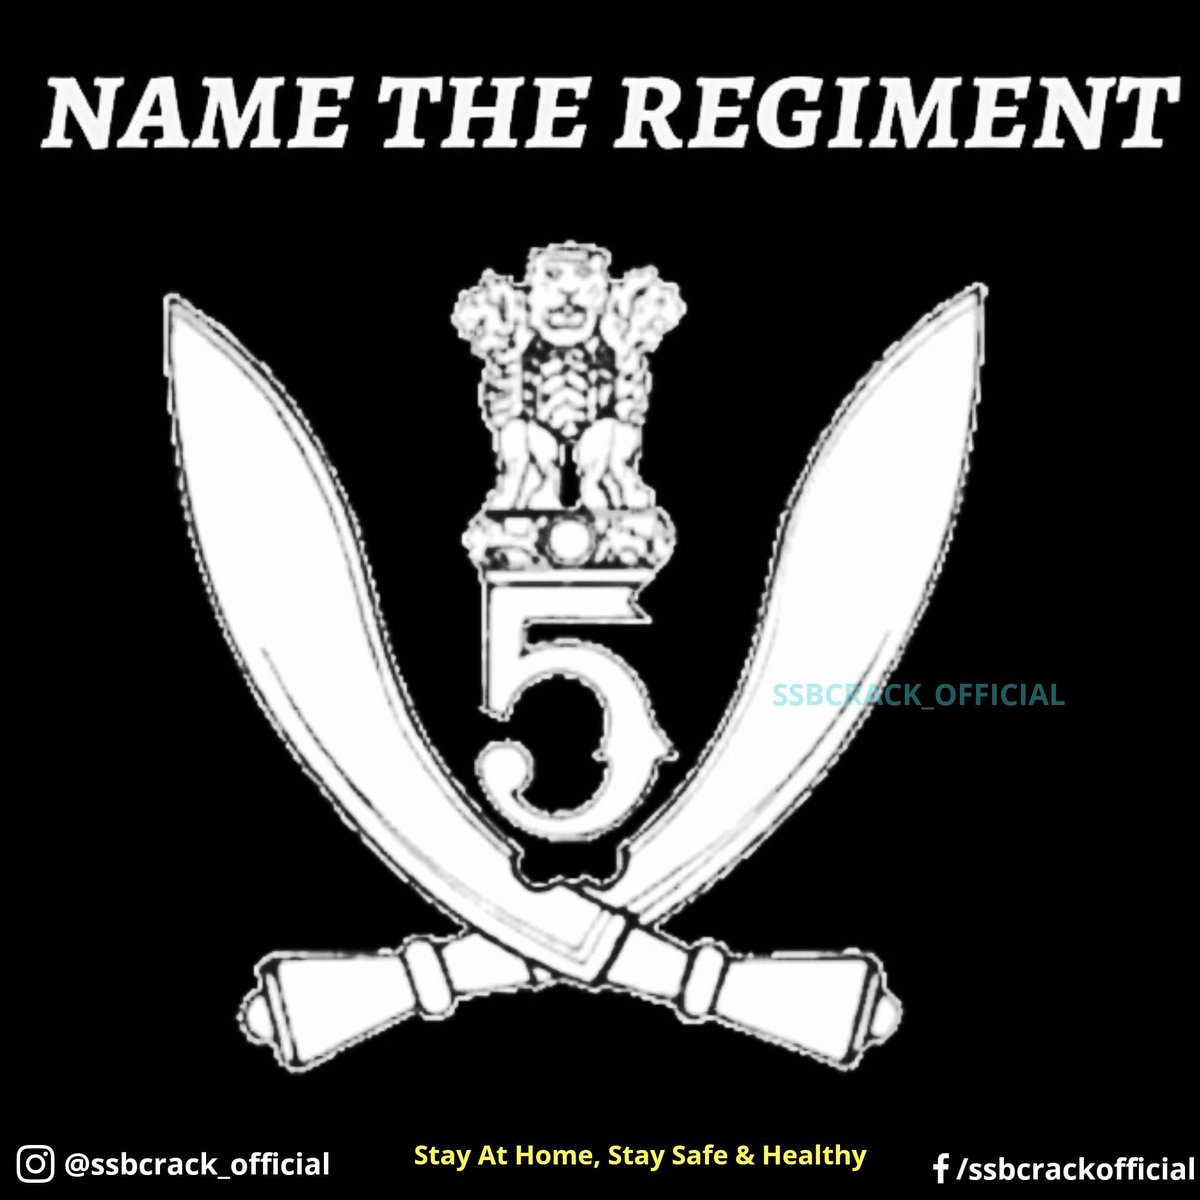 Name The Regiment⚔️
_______
Stay at Home, Stay Safe And Healthy
___
#ssbcrack_official #regiment #identifytheregiment #IndianArmy #indiannavy⚓ #IndianAirForce #armyday #armybrat #navy #airforce #indiannavymarcos #marcos #parasf #gurkharegiment #assamrifles #punjabregiment #naga